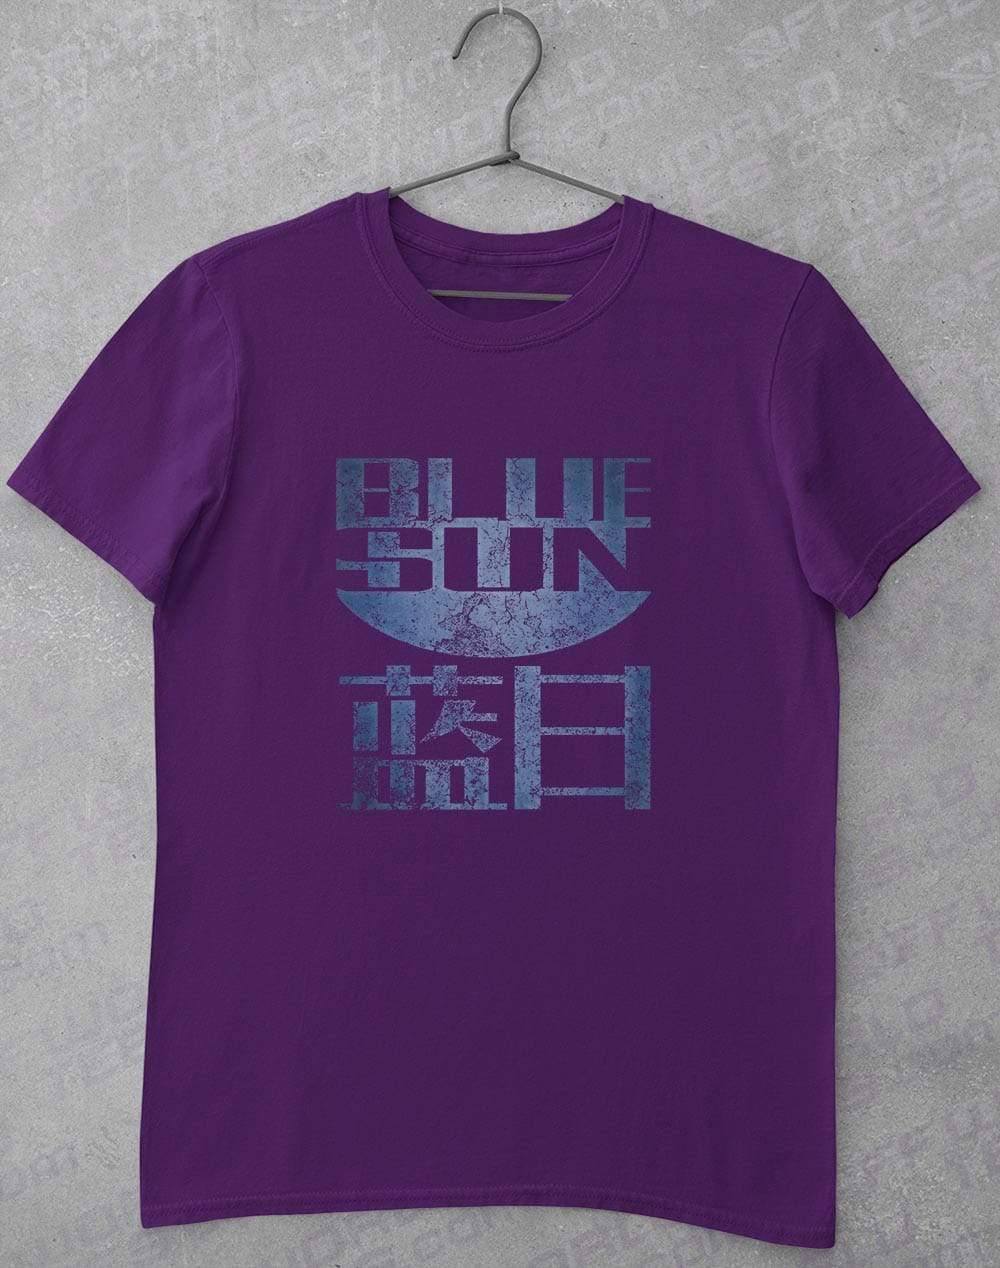 Blue Sun T-Shirt S / Purple  - Off World Tees